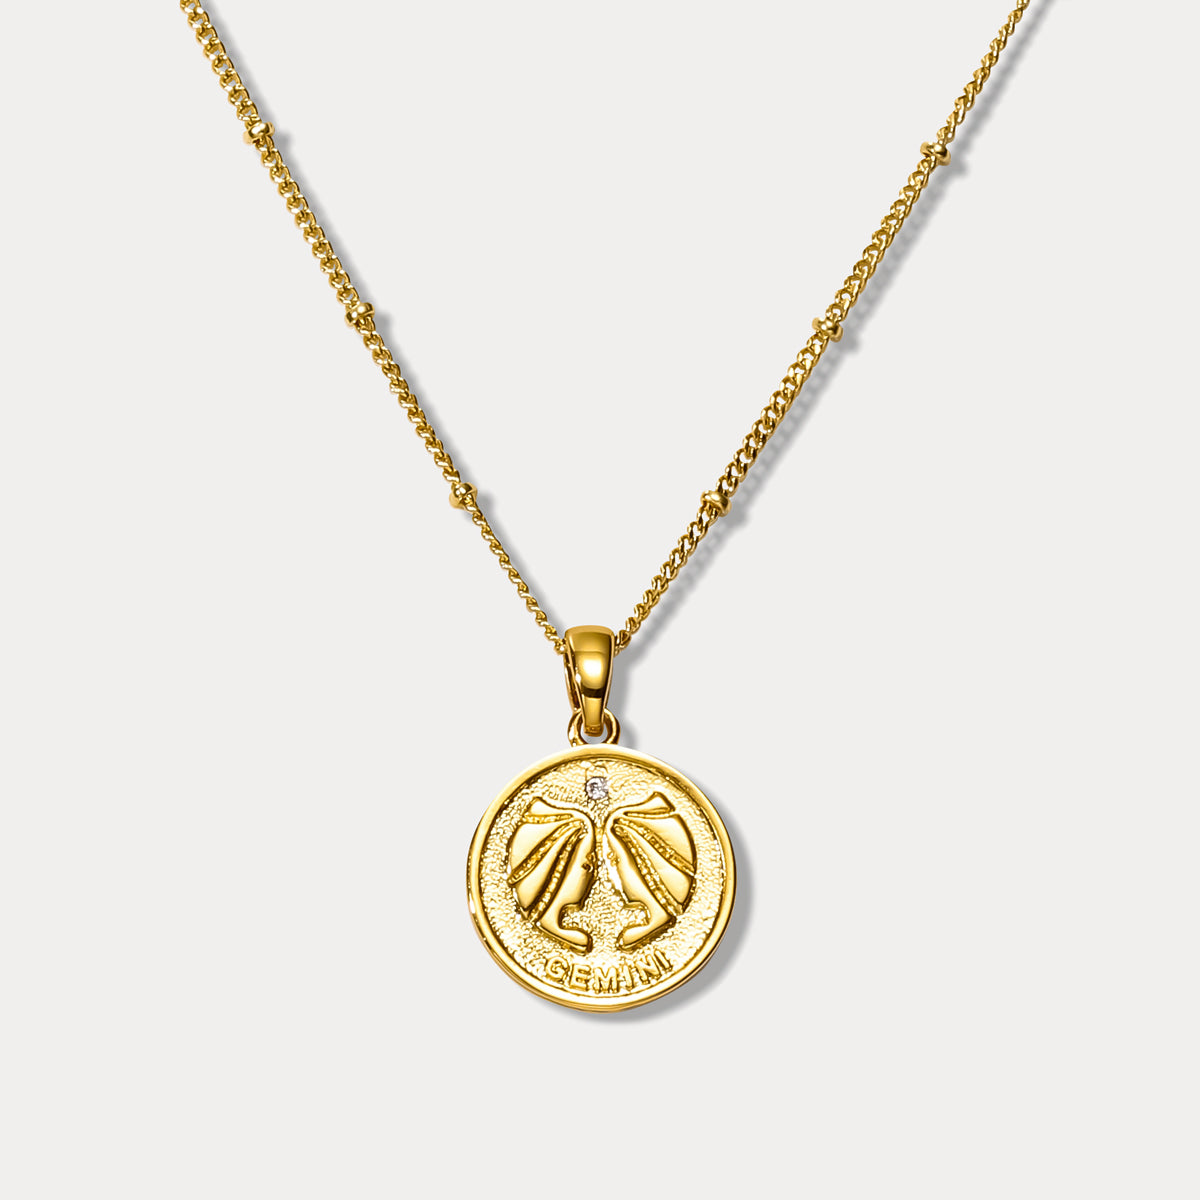 Selenichast Gemini Constellation Coin Pendant Necklace